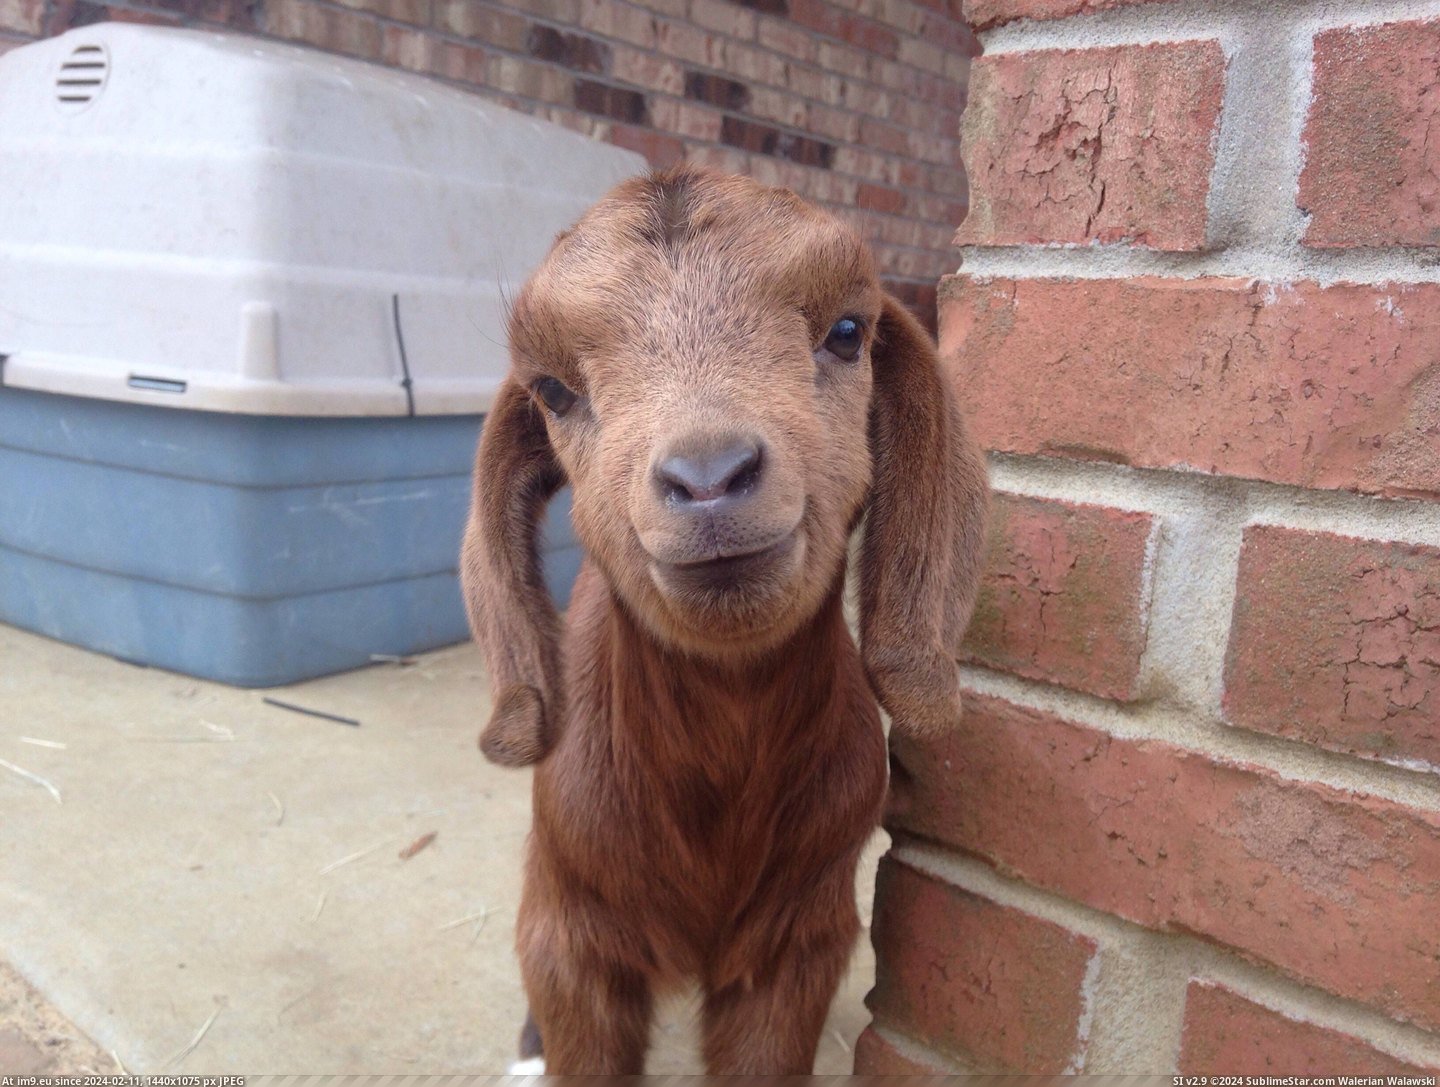 #Old #Fresh #Goat #Weeks [Aww] Fresh Goat, less than 2 weeks old Pic. (Bild von album My r/AWW favs))